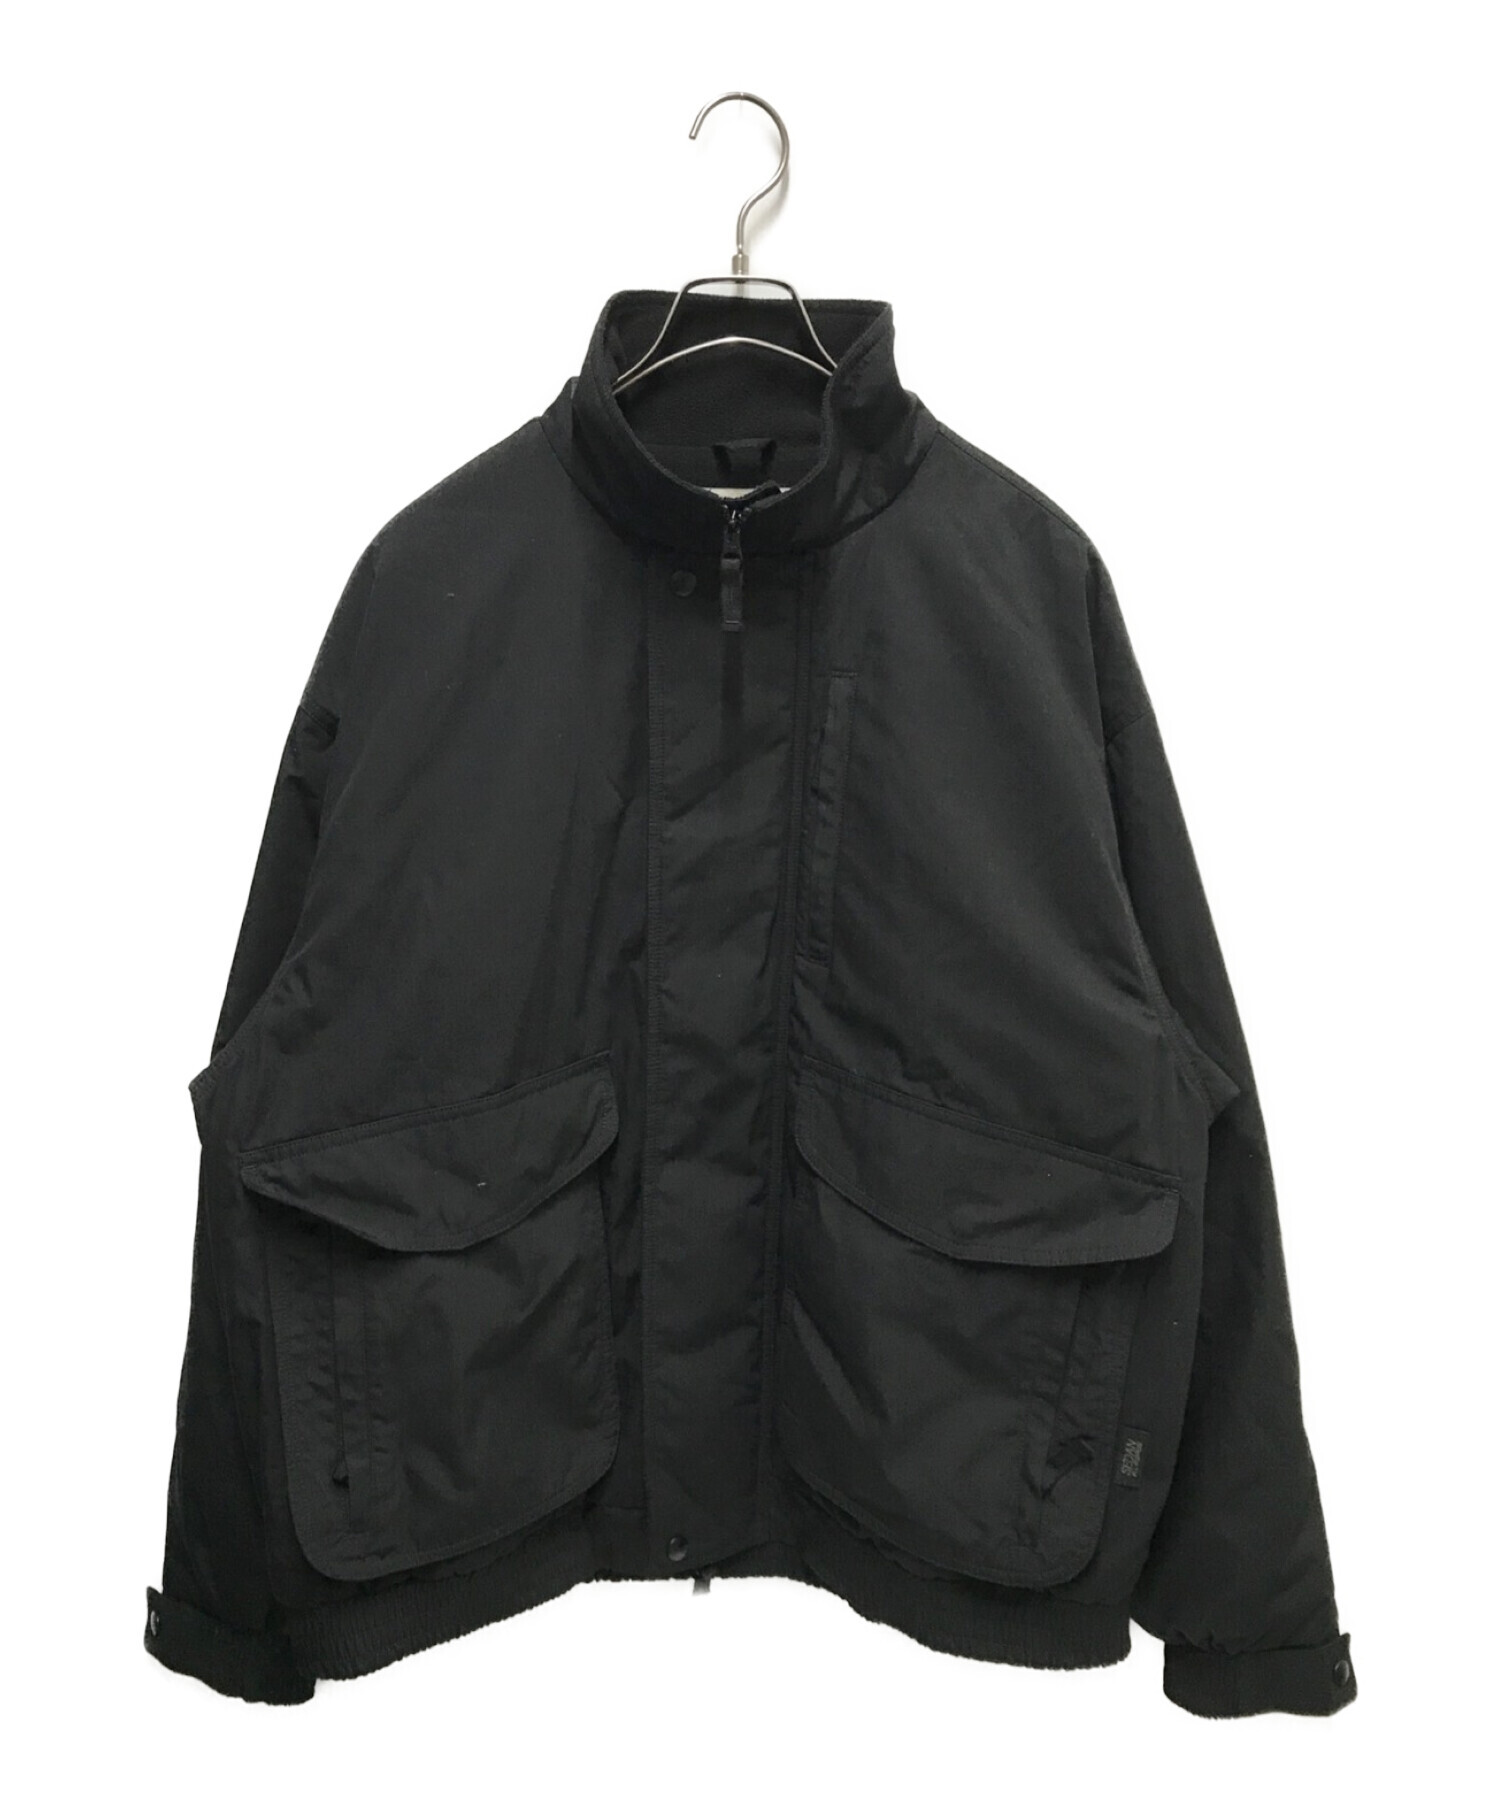 SEDAN ALL PURPOSE (セダンオールパーパス) Fleece Lined Jacket ブラック サイズ:XL